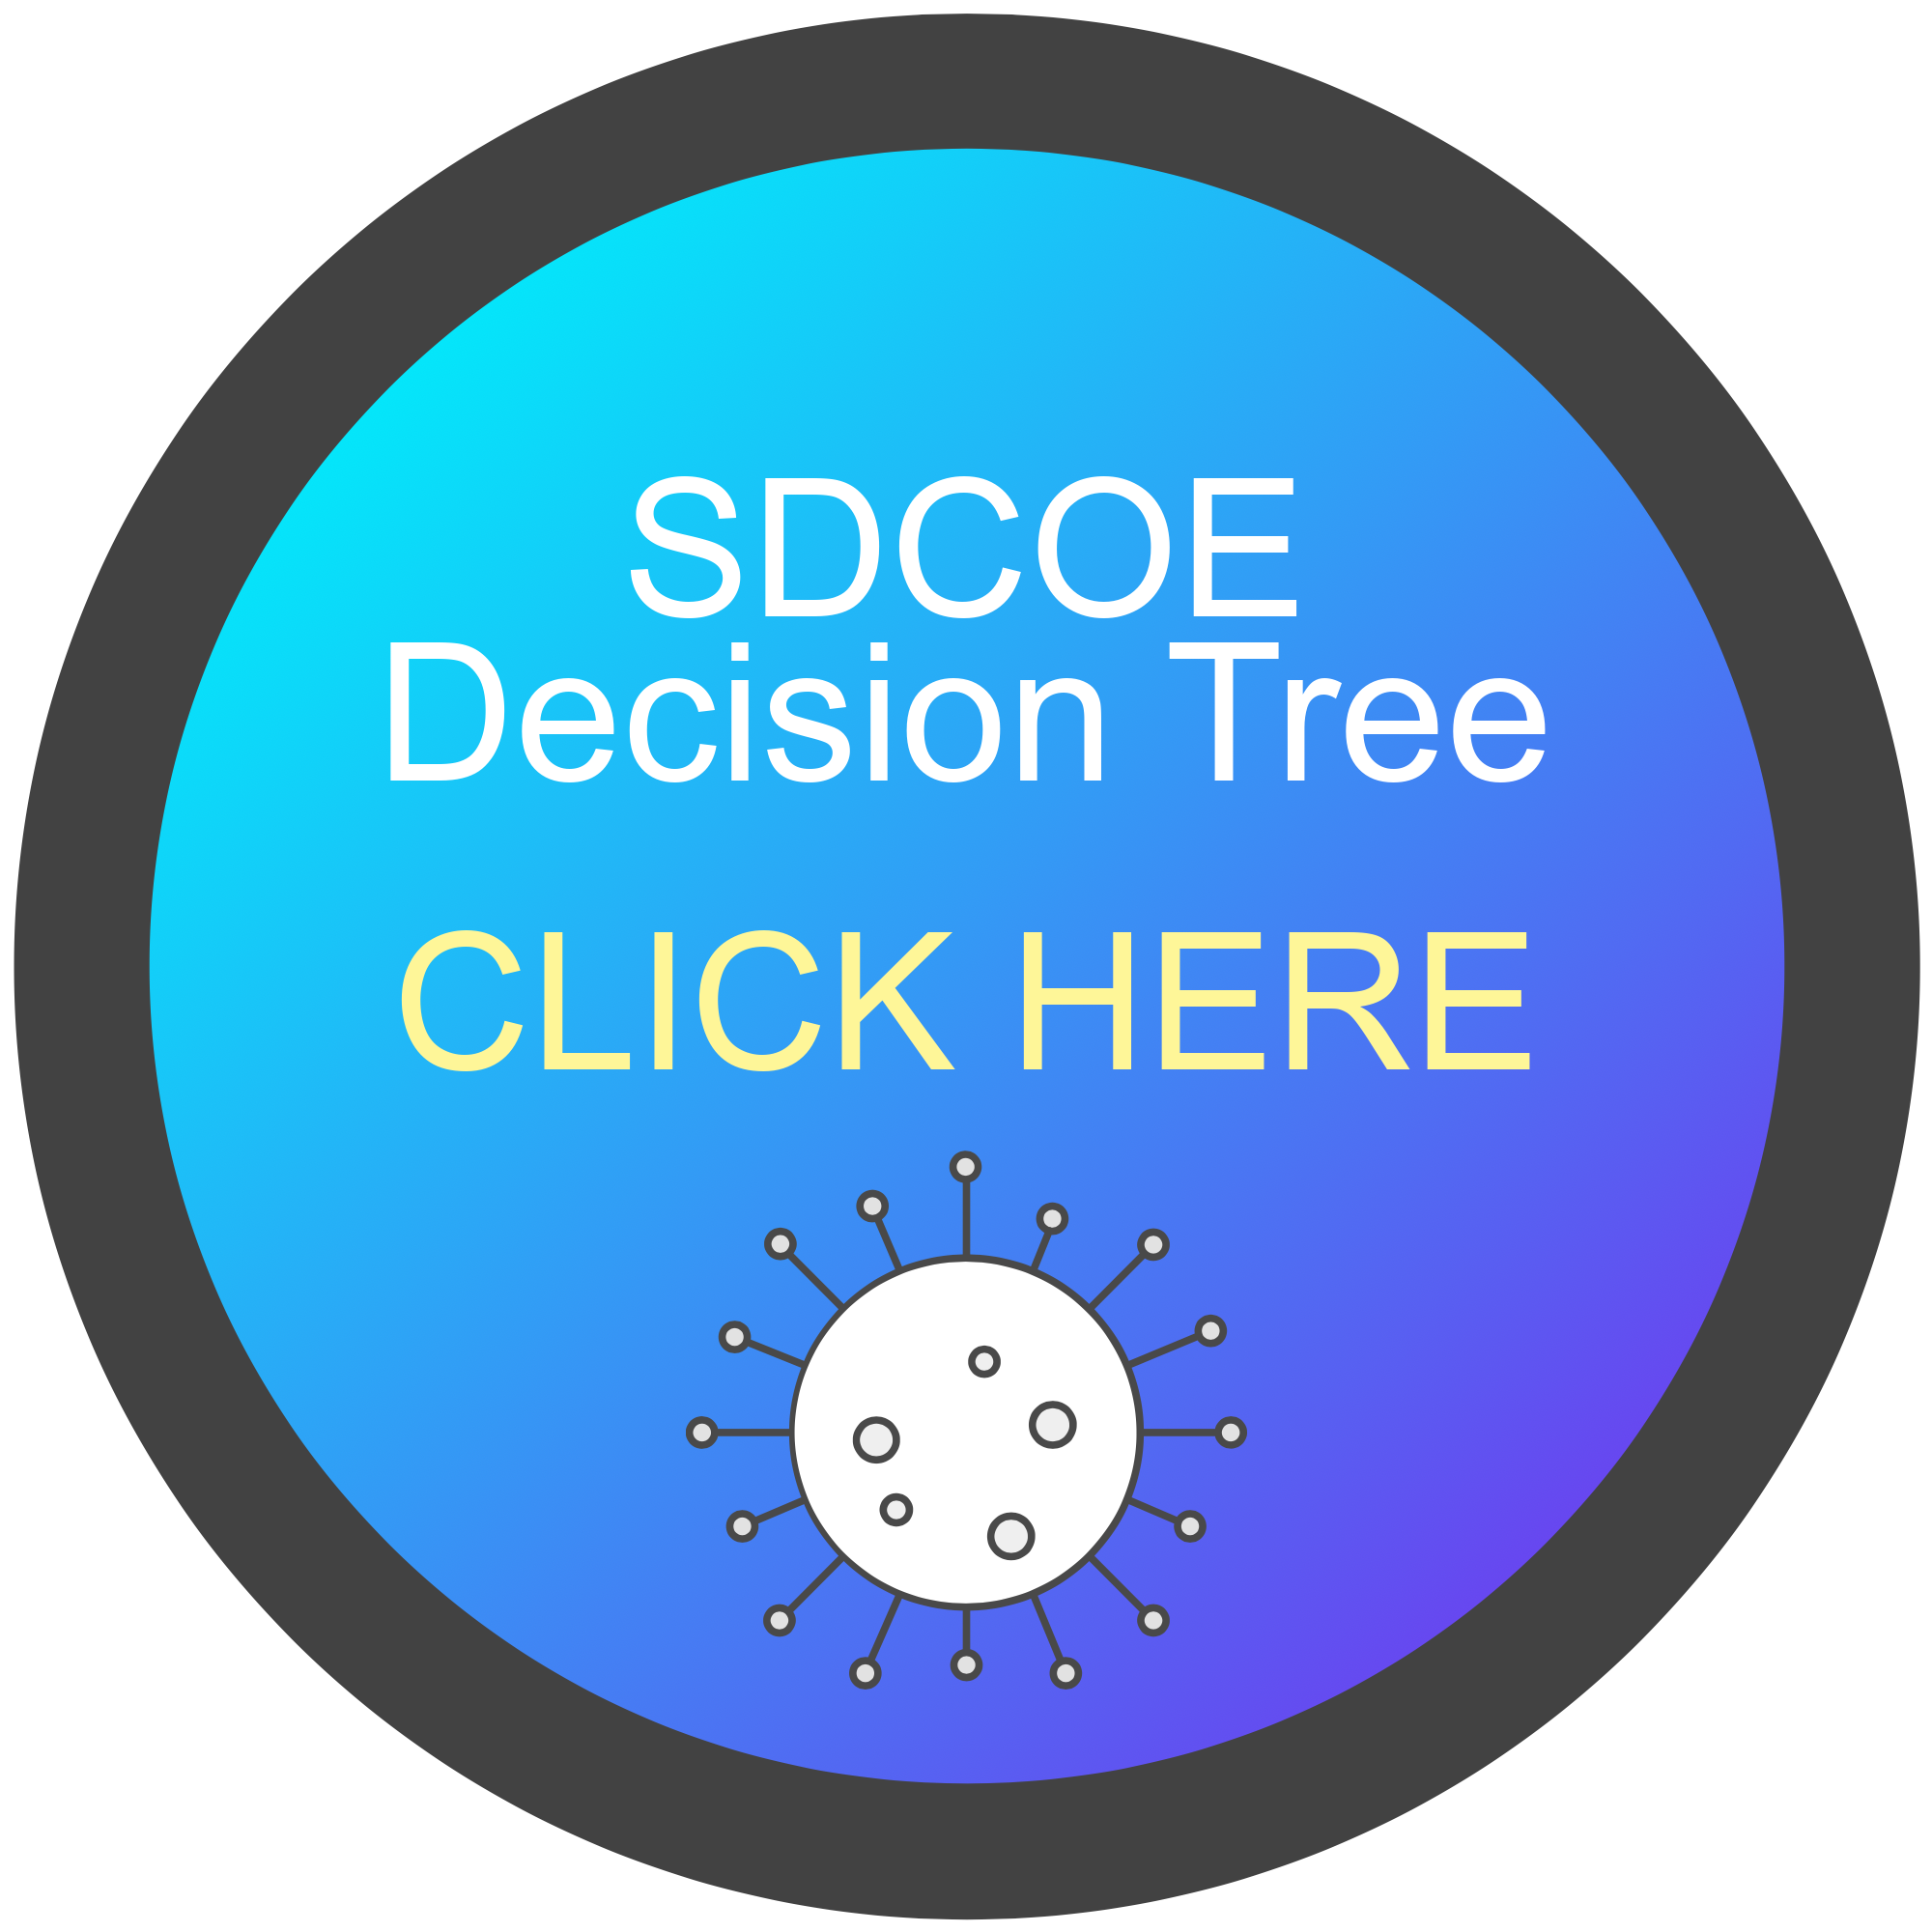 SDCOE decision tree button